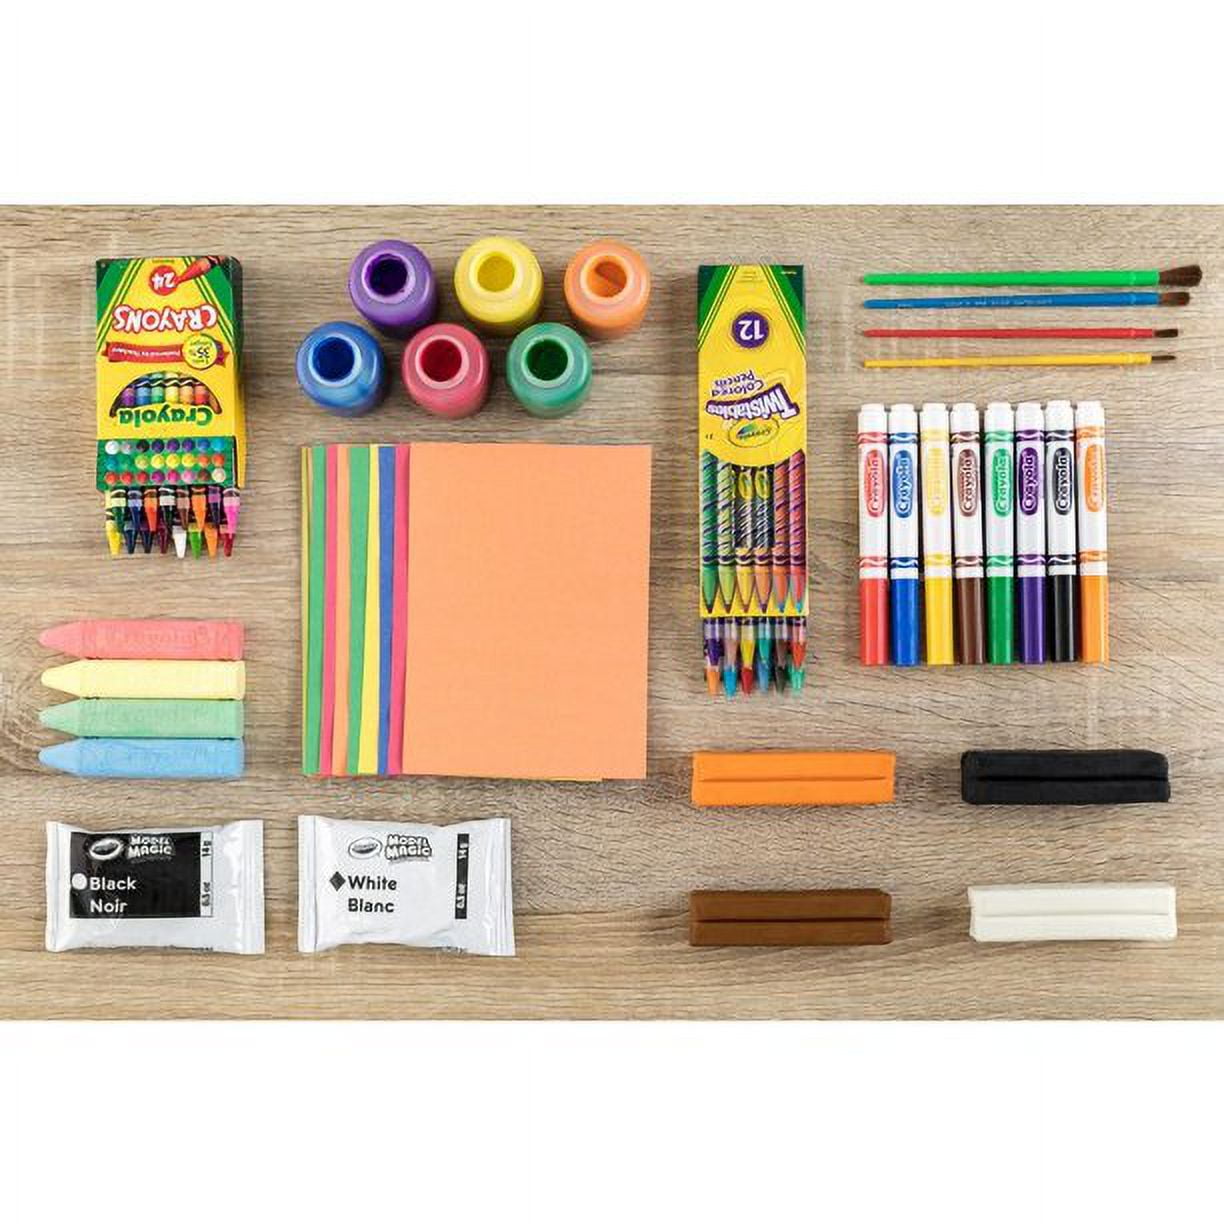 Crayola Creativity Tub, Art Set, 102 Pcs, Toys for Kids, Creative Holiday  Gifts, Beginner Child - Yahoo Shopping